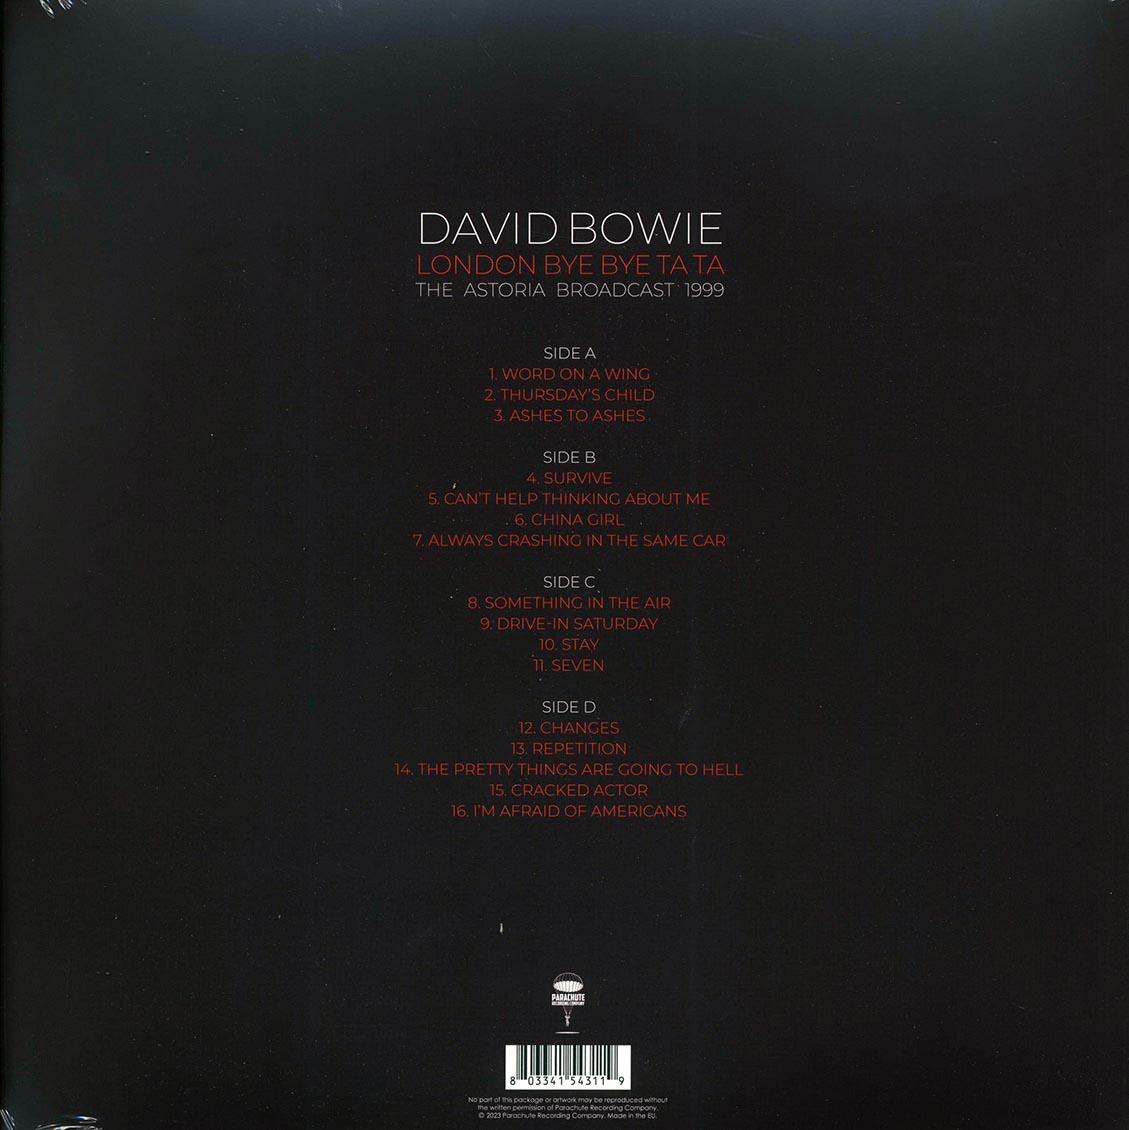 David Bowie - London Bye Bye Ta Ta: The Astoria Broadcast 1999 (ltd. ed.) (2xLP) (clear vinyl) - Vinyl LP, LP